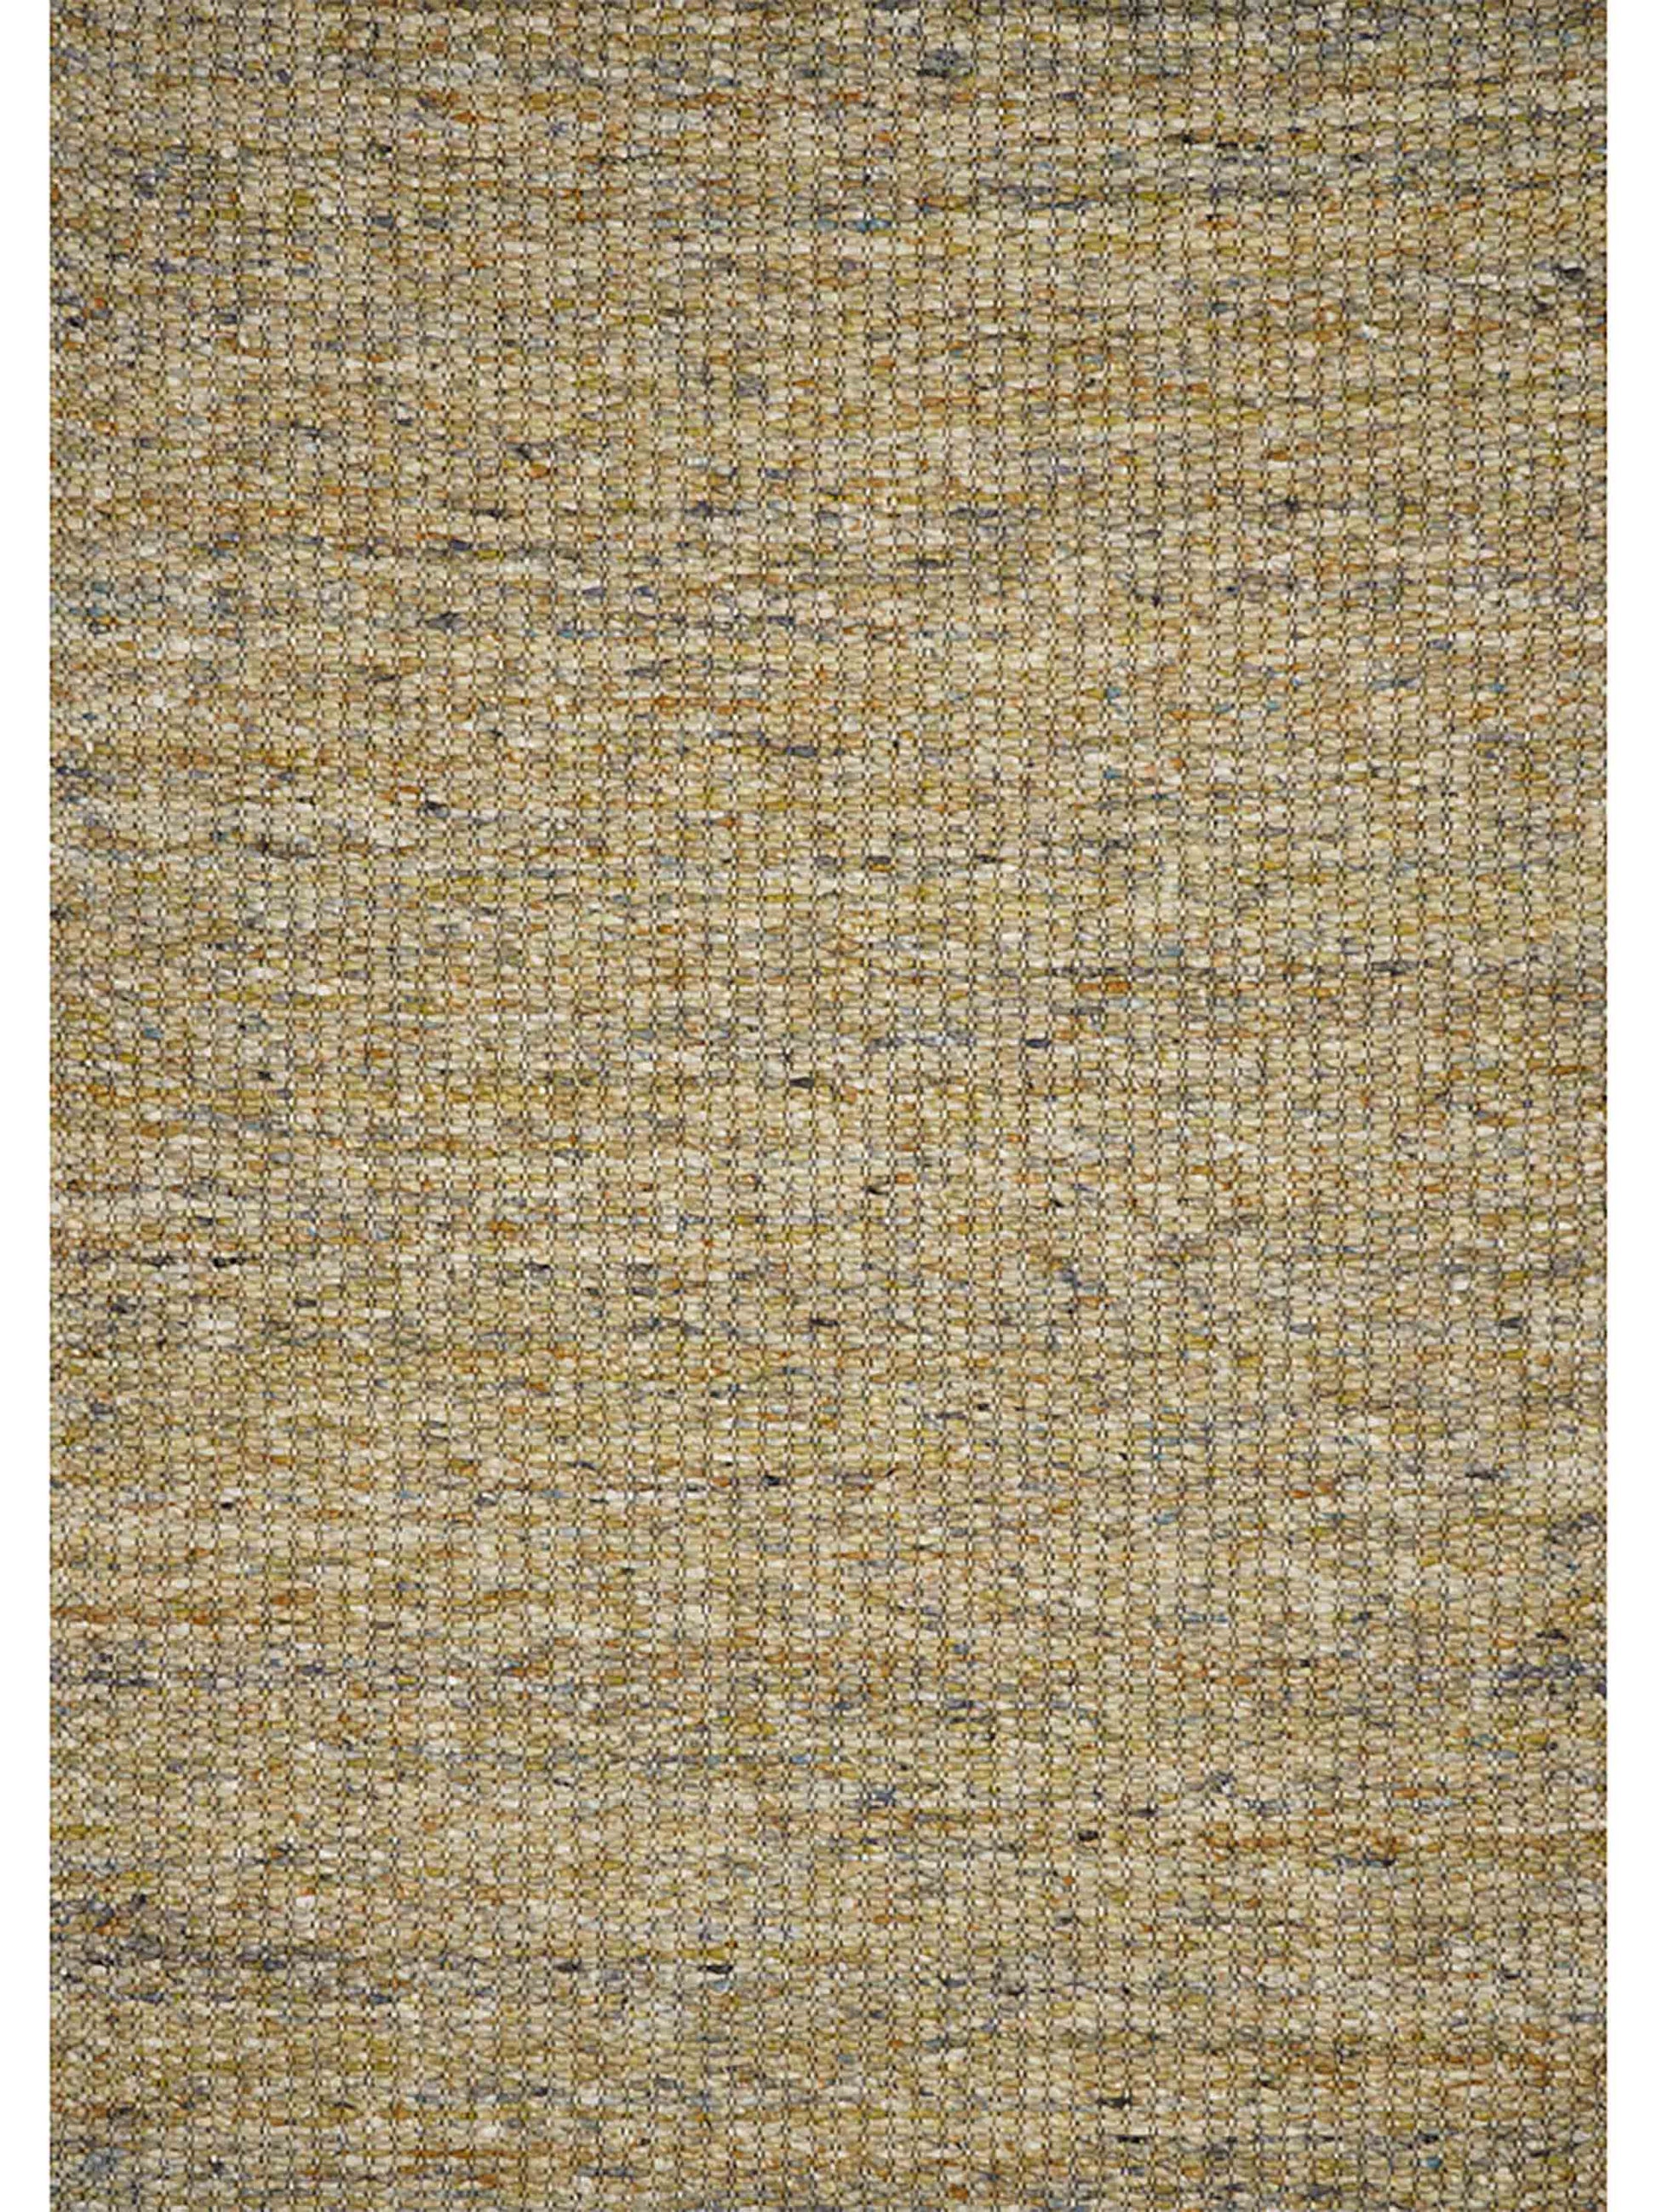 Vloerkleed De Munk Carpets Firenze FI-27 Vloerkledenwinkel